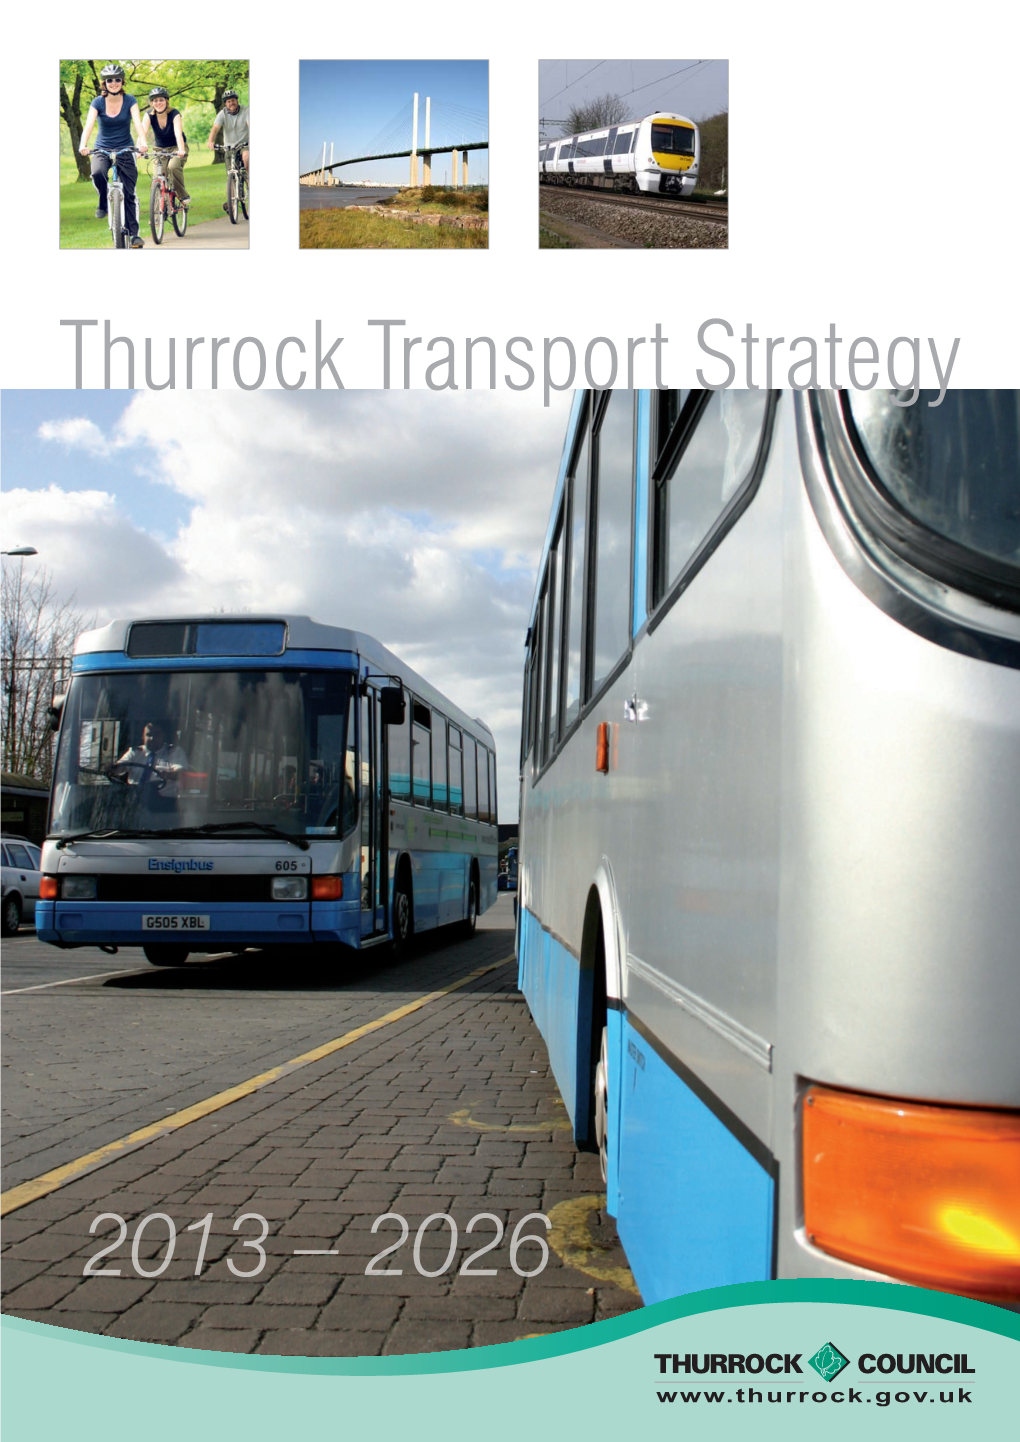 Thurrock Transport Strategy, 2013-2026